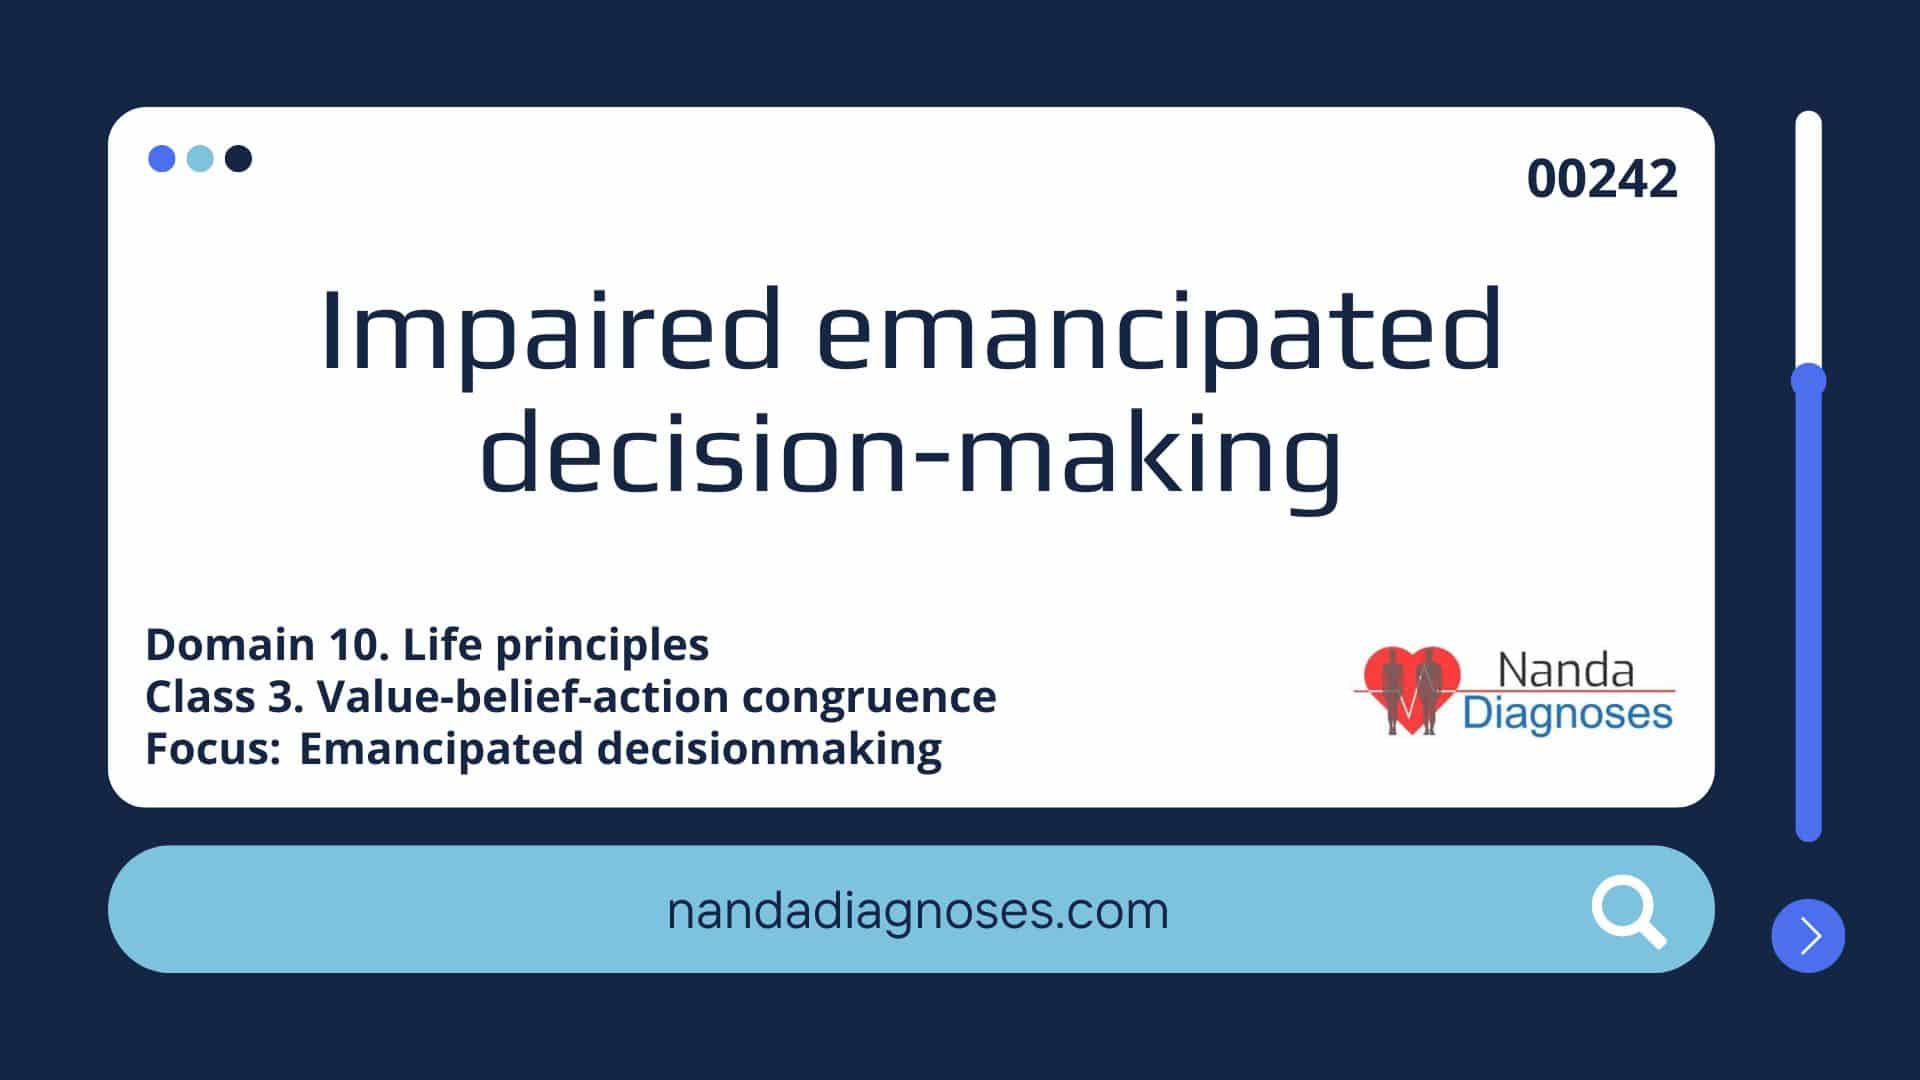 Impaired emancipated decision-making